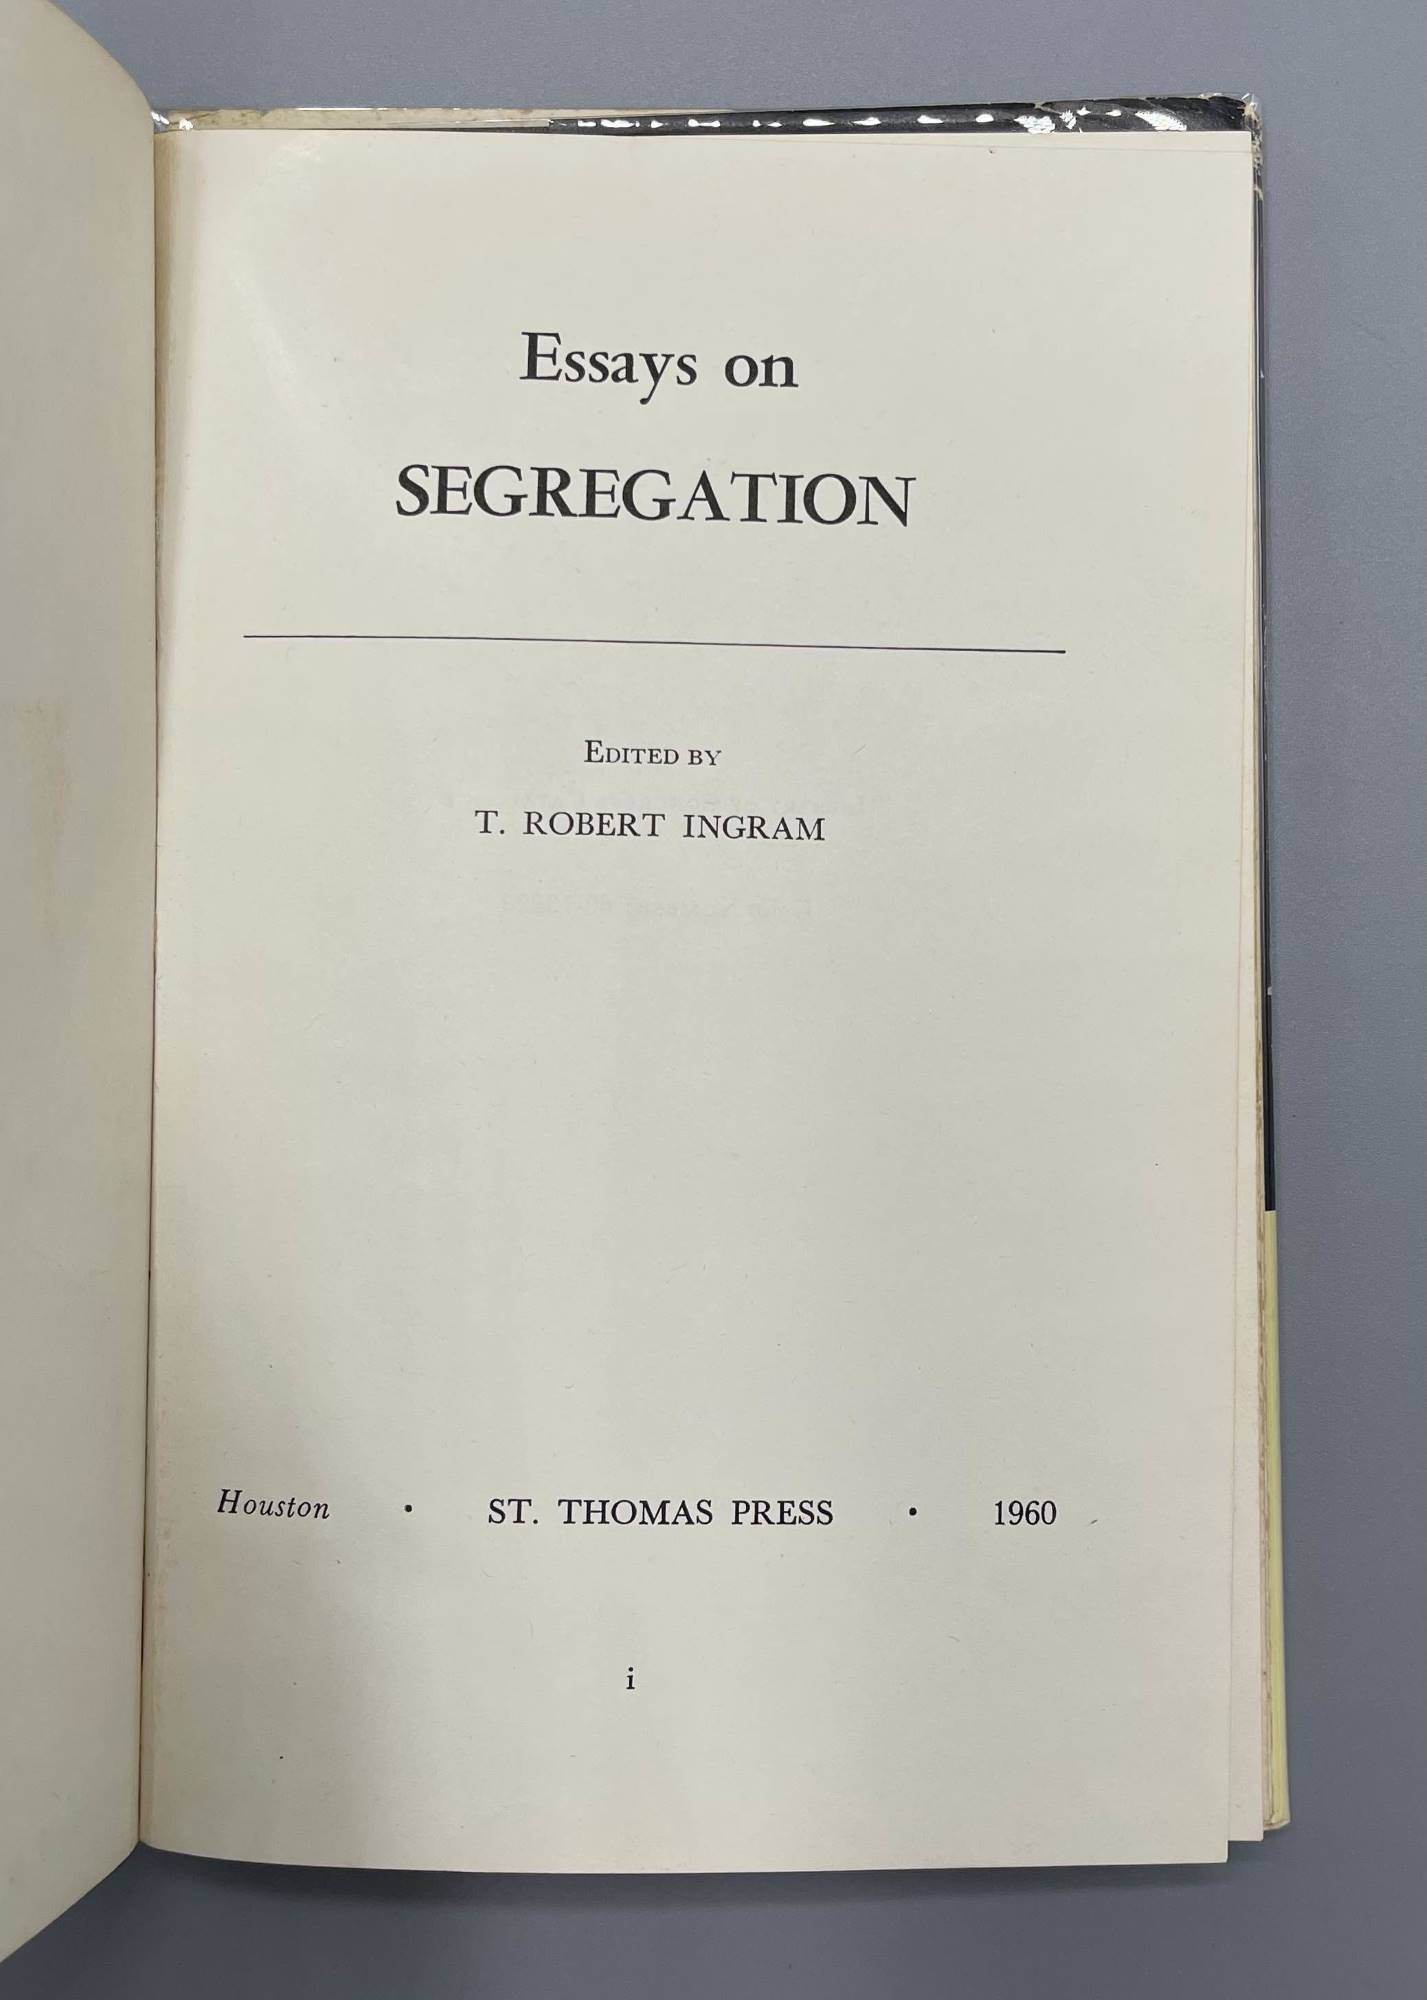 segregation essays